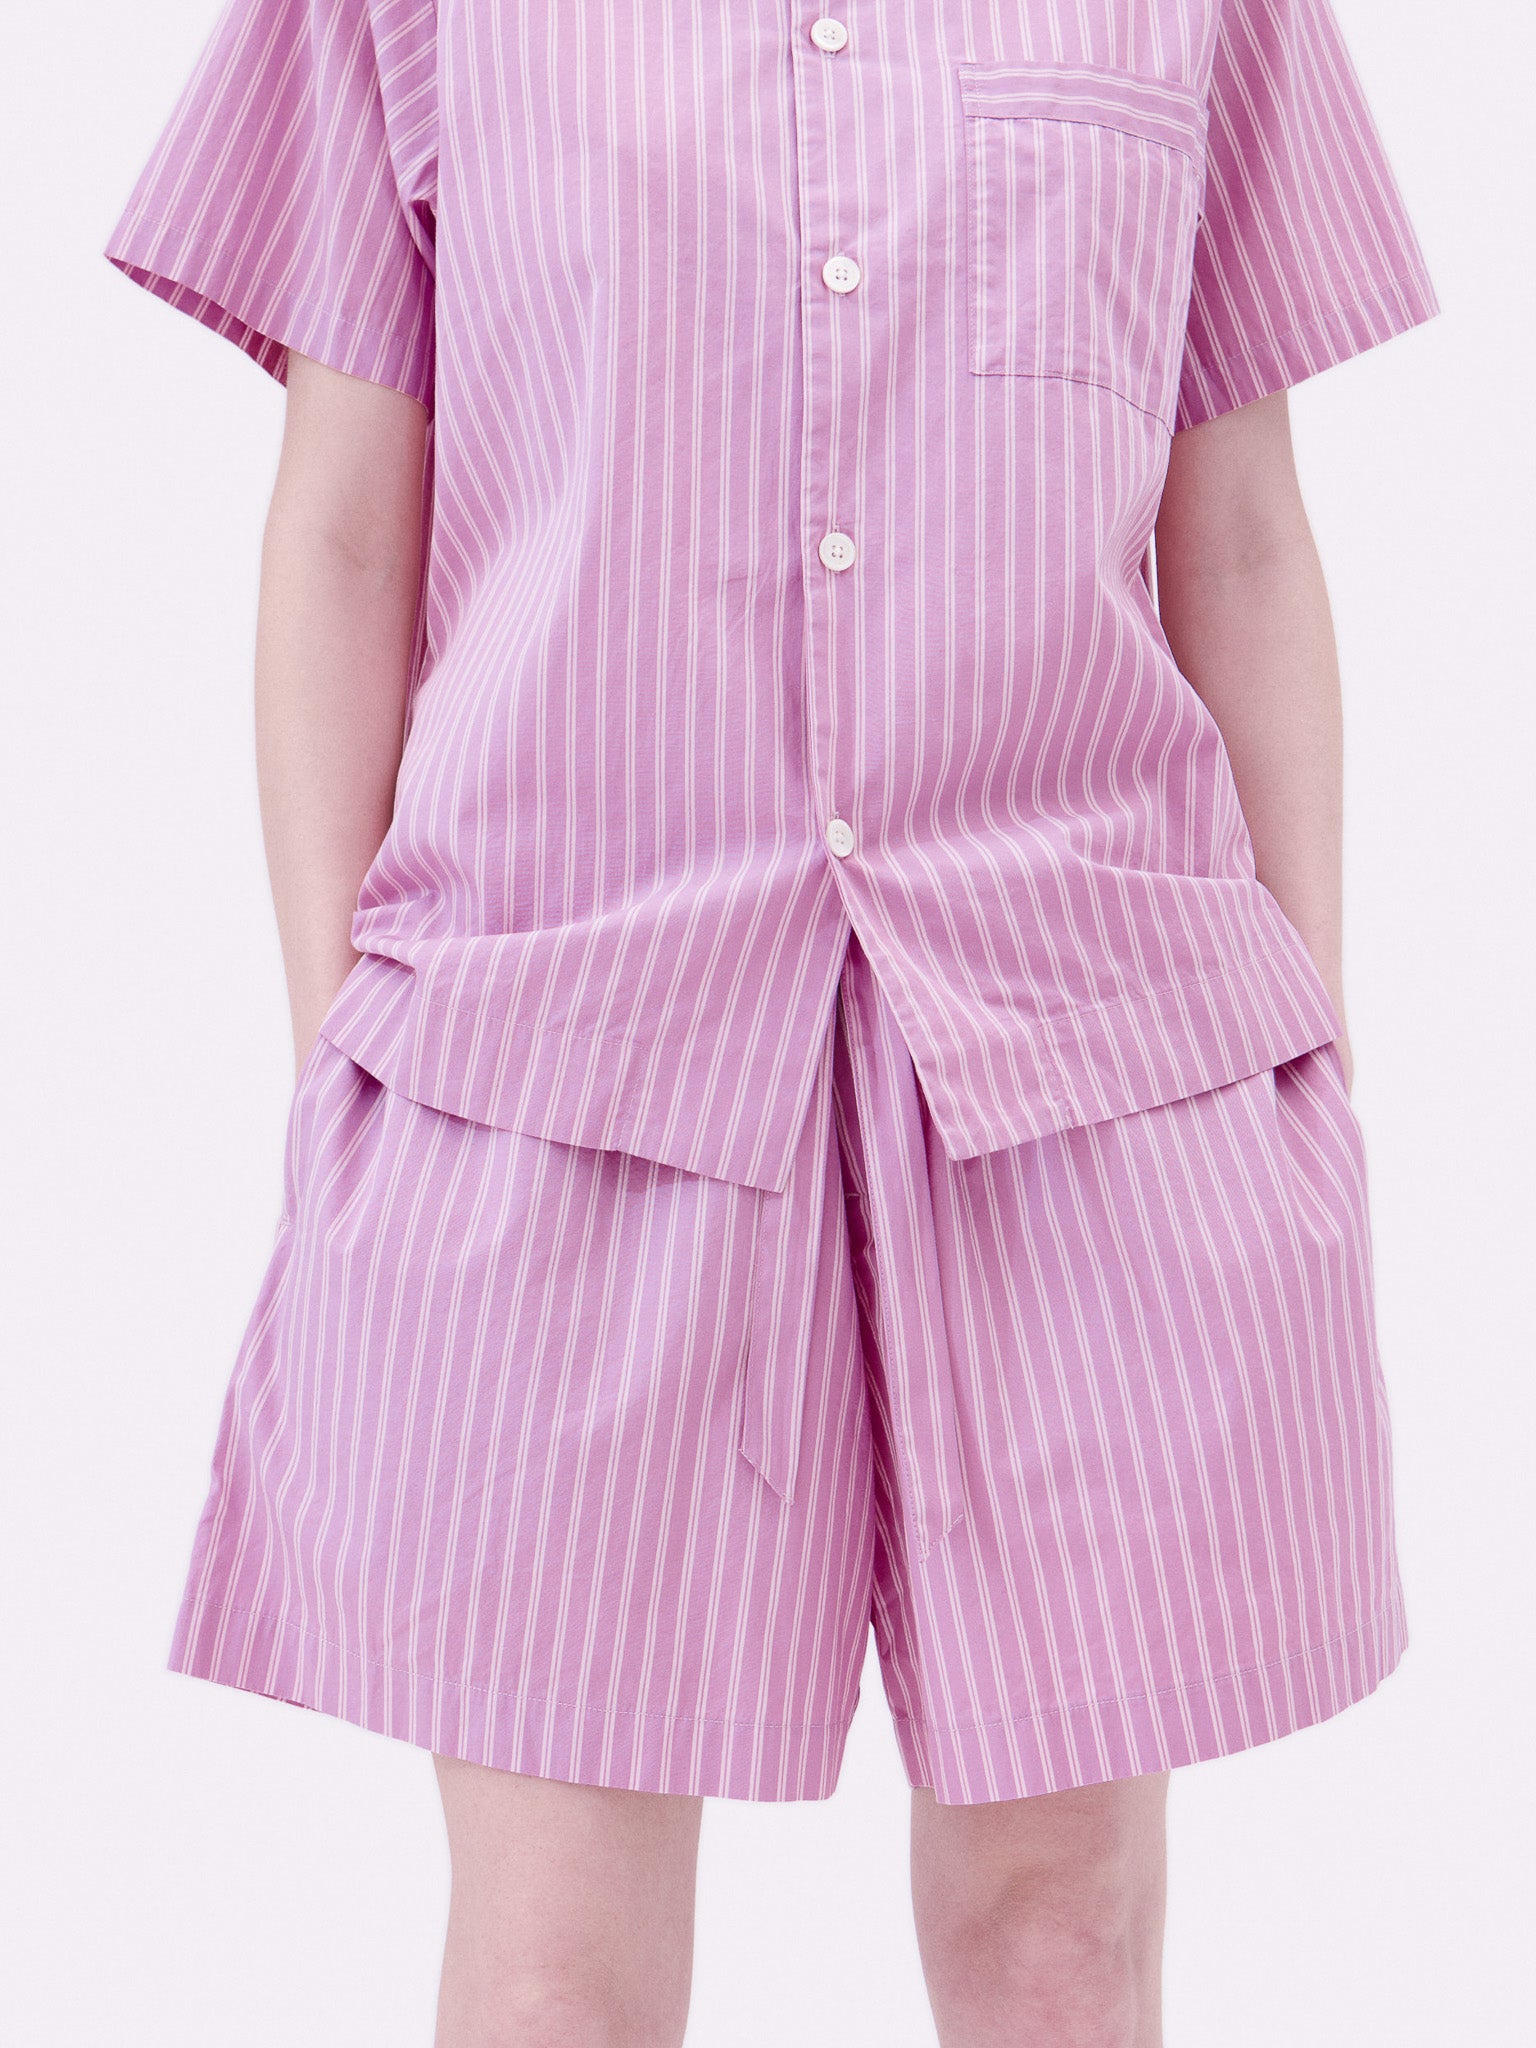 Poplin Pyjamas Shorts in Purple Pink Stripes